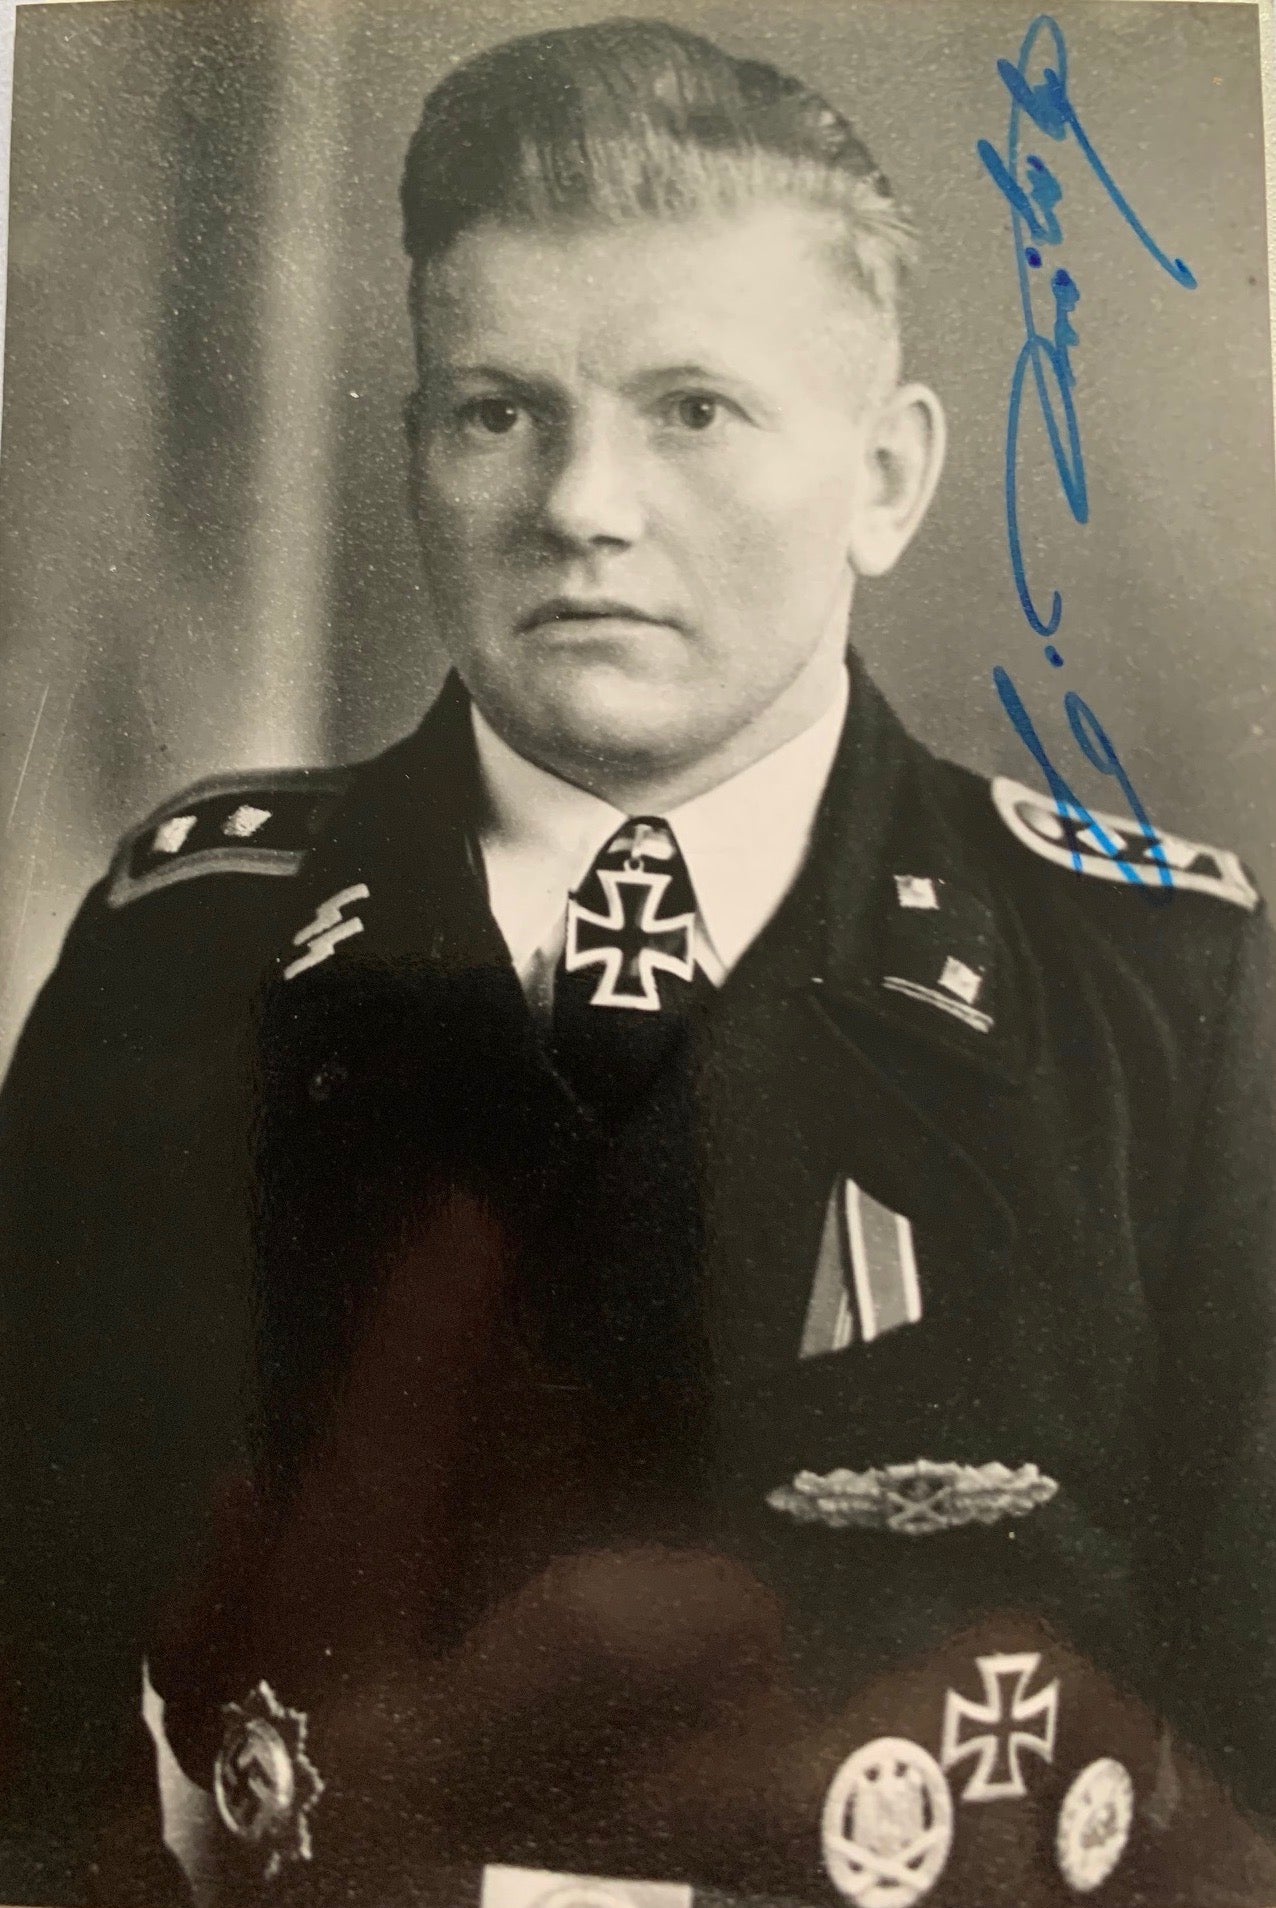 Emil Siebold hand signed photo